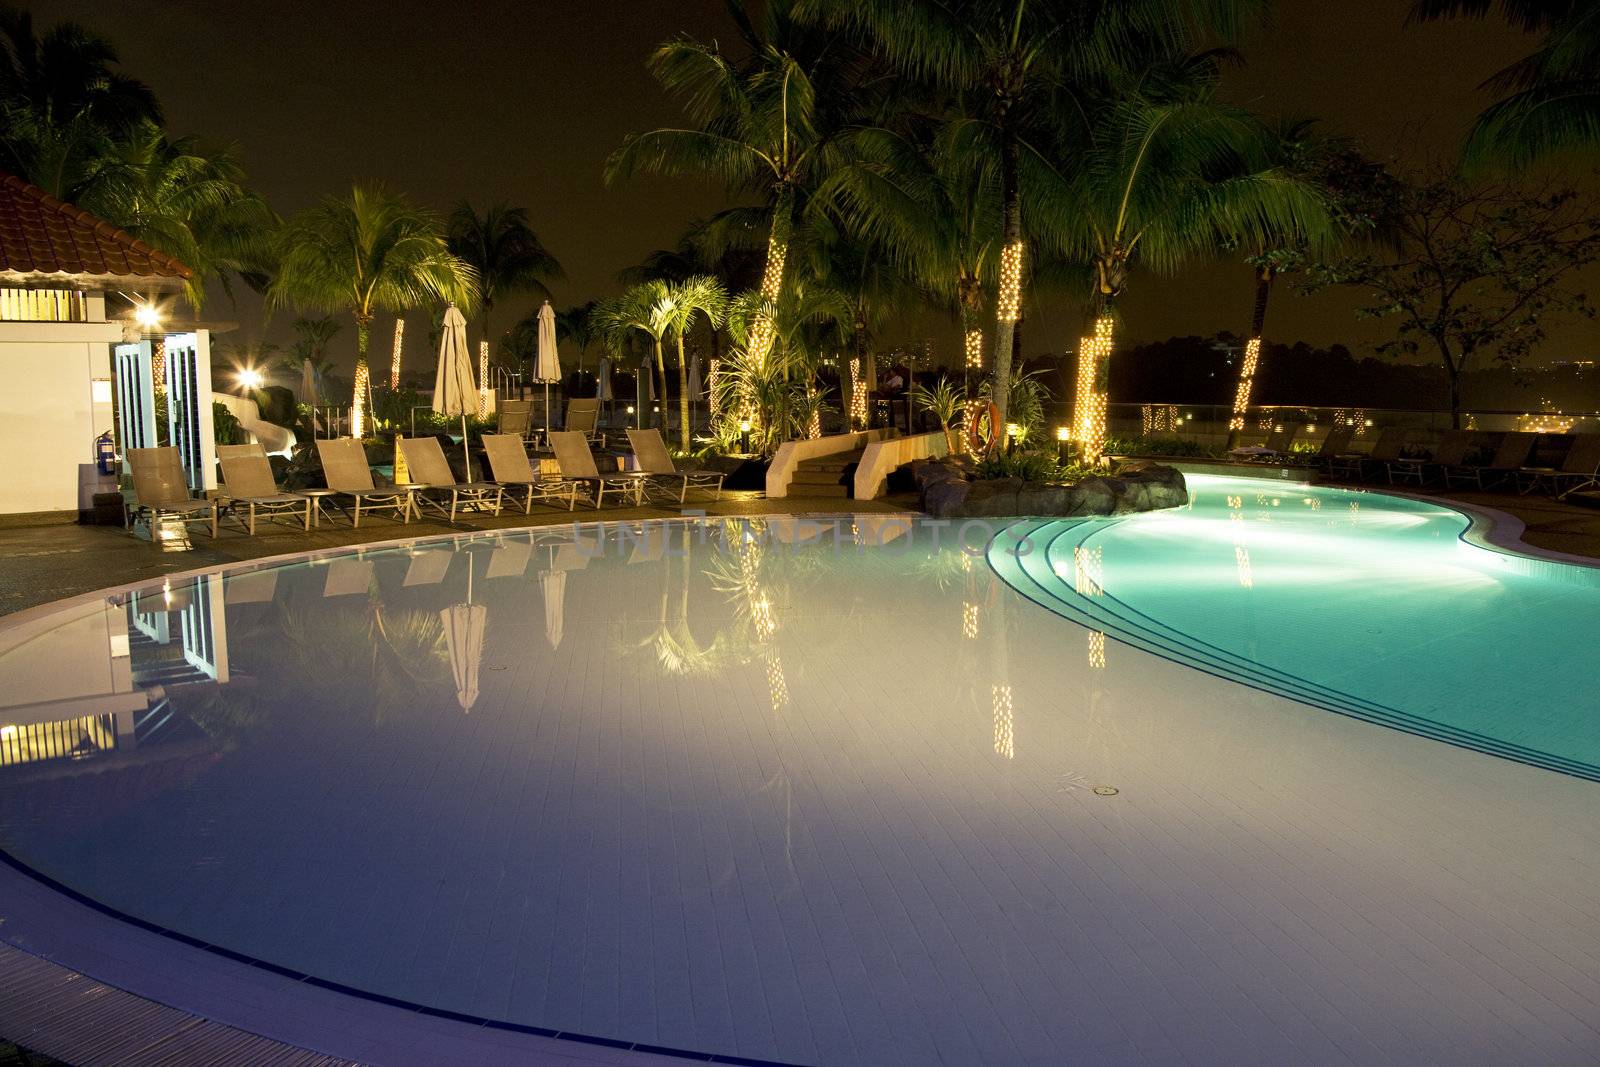 Swimming Pool at Night by shariffc